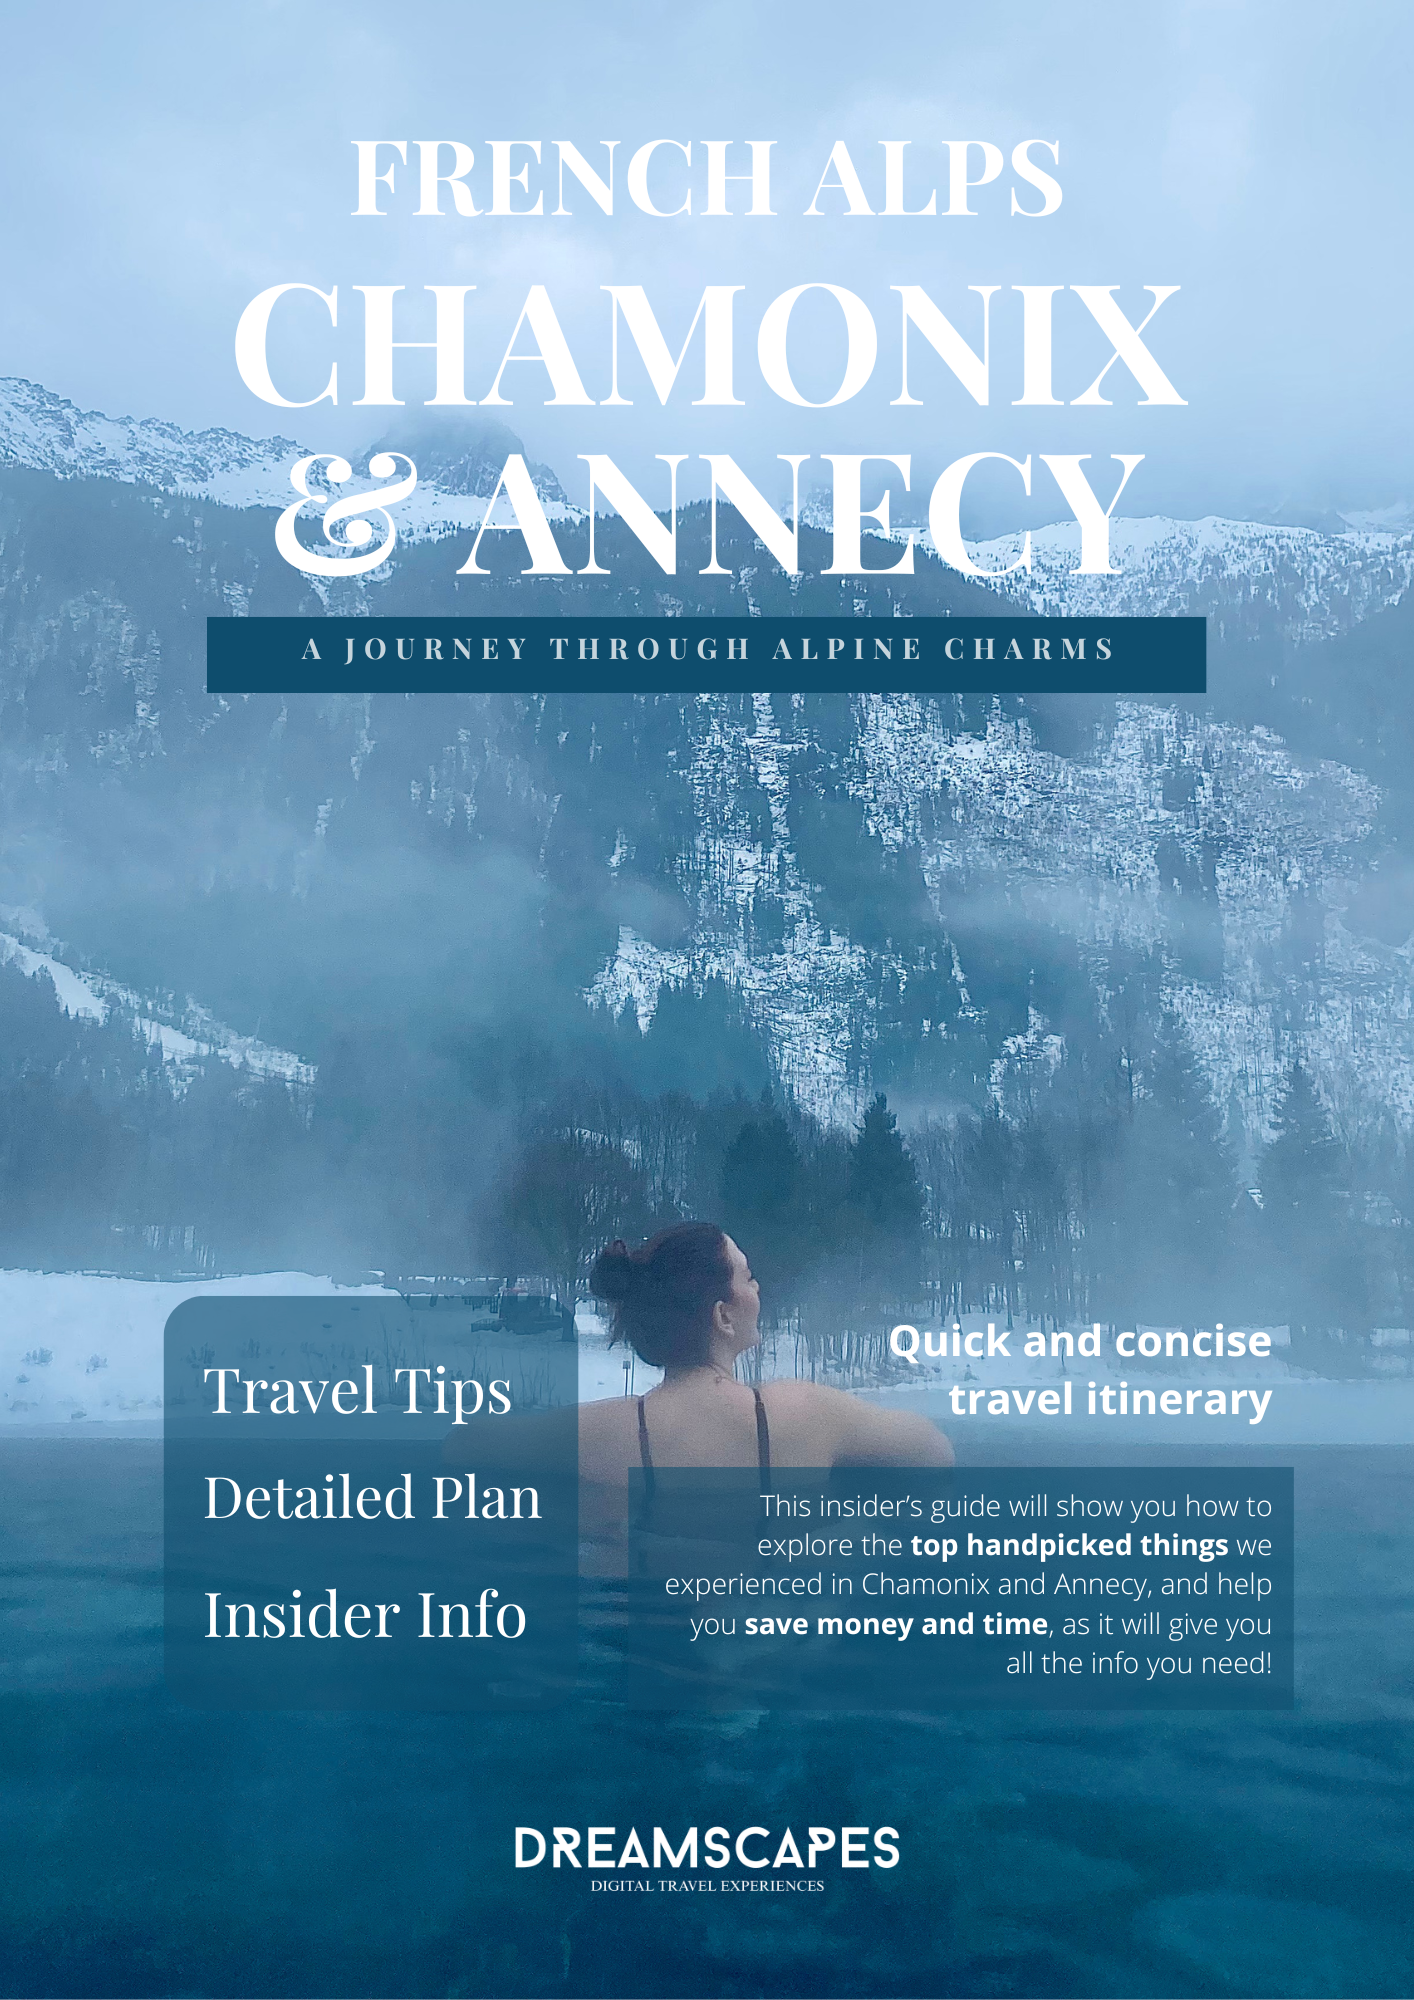 FRANCE/ 2 DAYS IN CHAMONIX & ANNECY